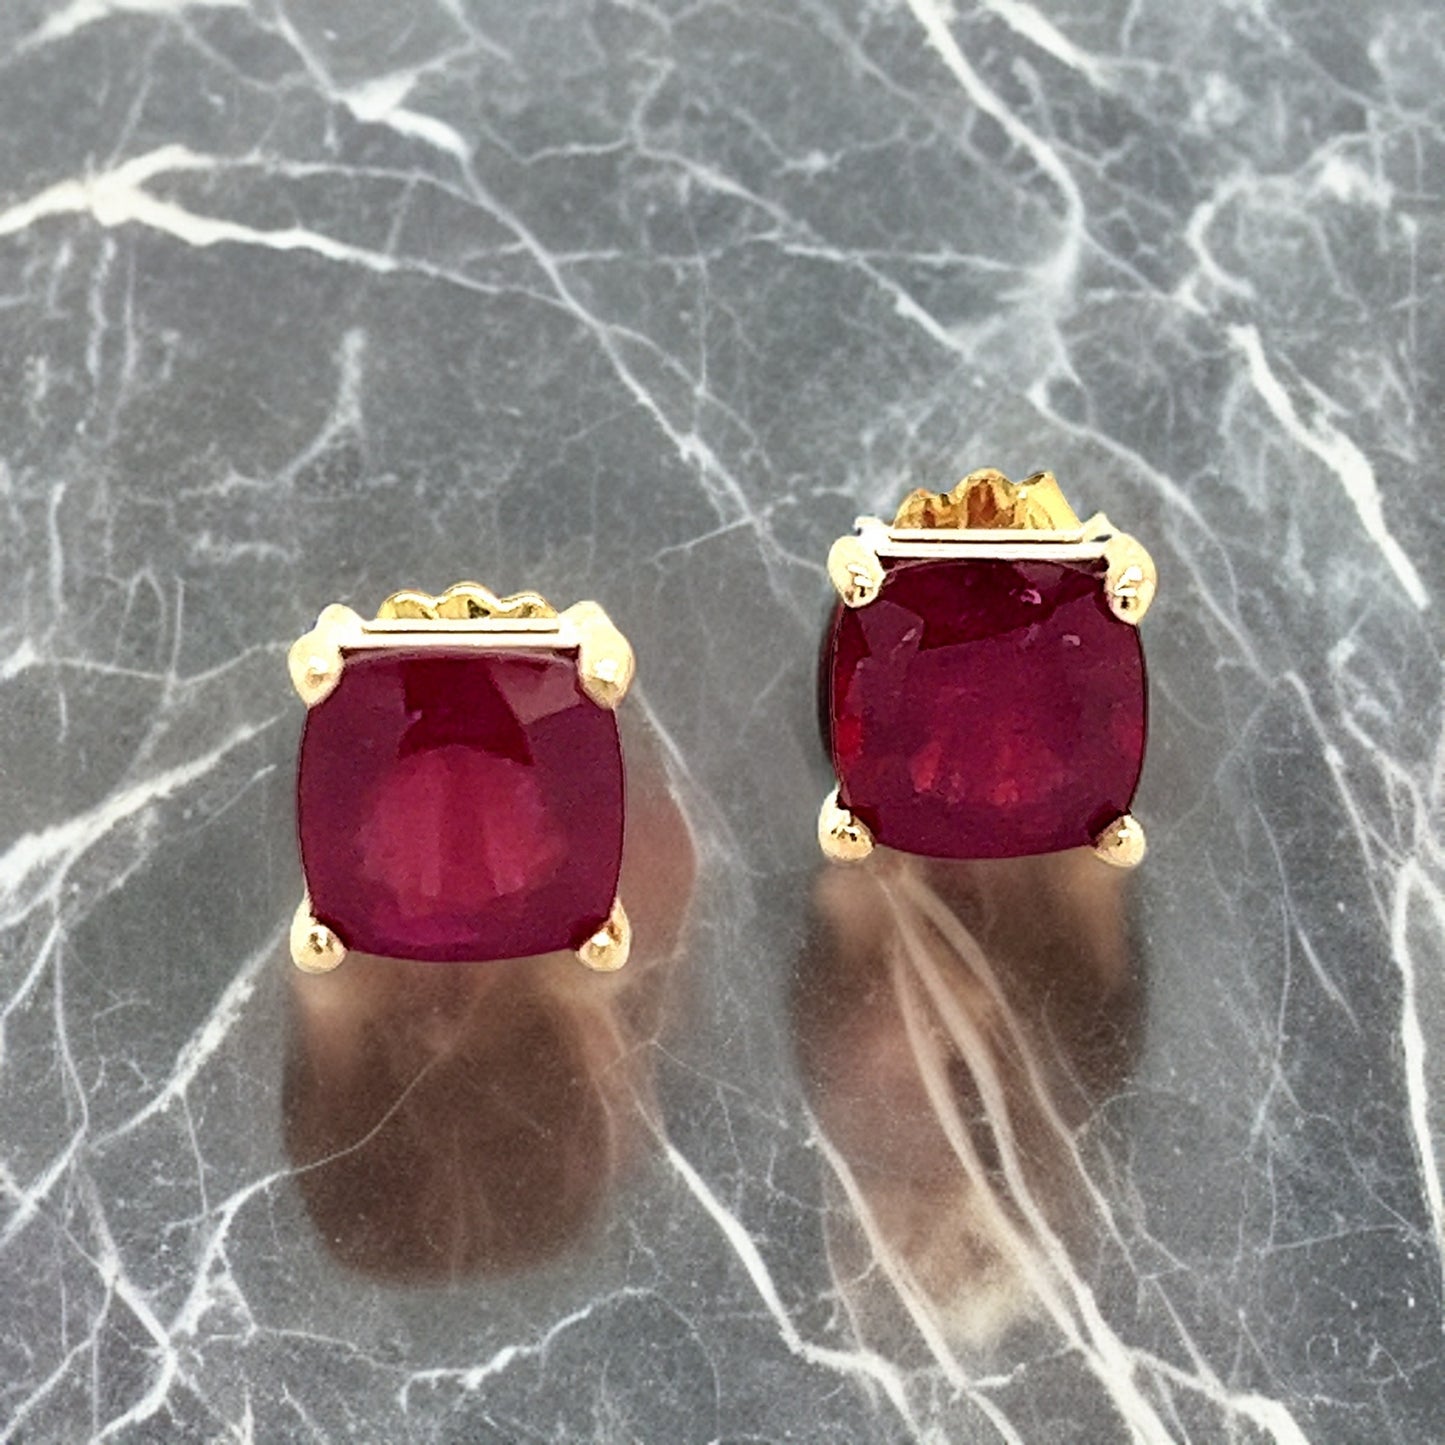 Natural Ruby Stud Earrings 14k Yellow Gold 4.18 TW Certified $799 307909 - Certified Fine Jewelry